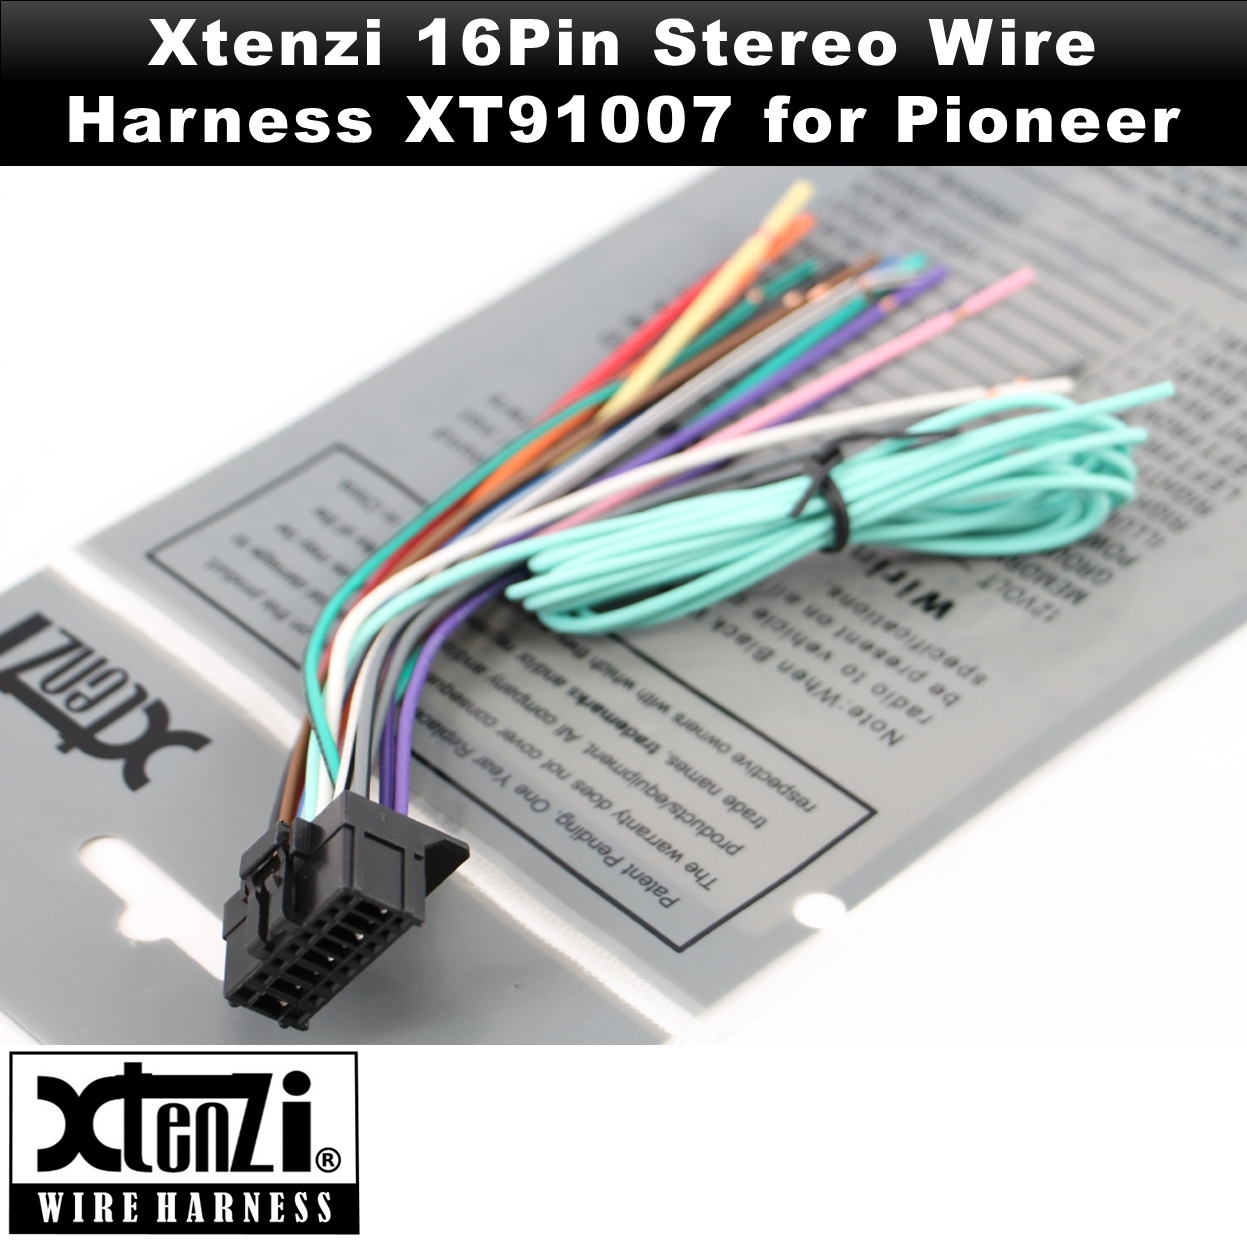 Xtenzi 16Pin Car Radio Power Wire Harness Connector for Pioneer AVICD3 AVICX940BT AVICX930BT AVICX9310BT AVICX920BT AVICZ120BT - XT91007